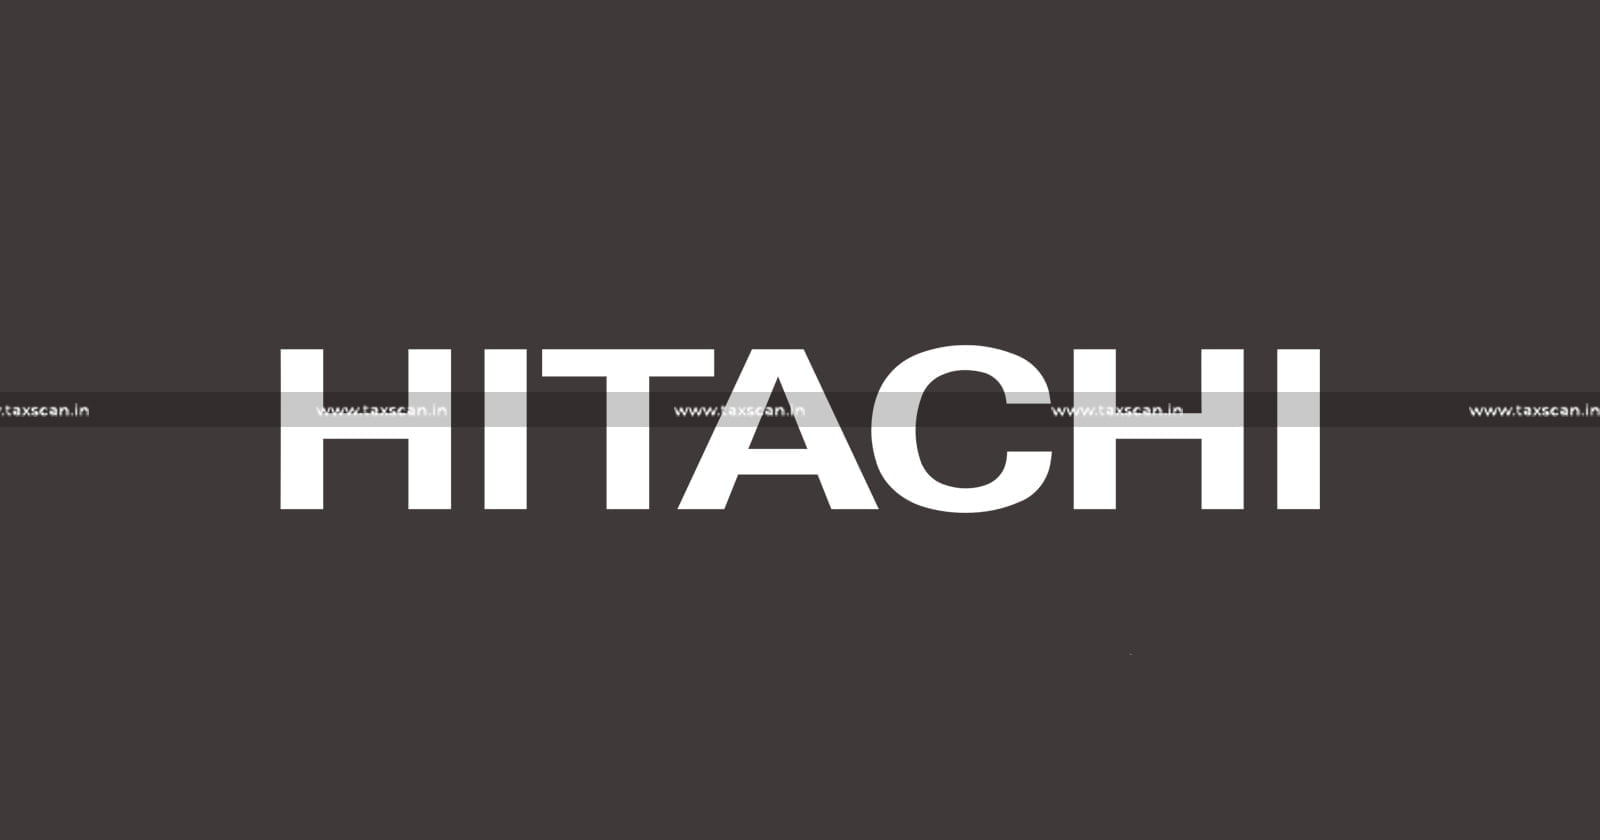 Finance Controller Vacancy in HITACHI - HITACHI - Finance Controller Vacancy - Vacancy in HITACHI - jobscan - taxscan